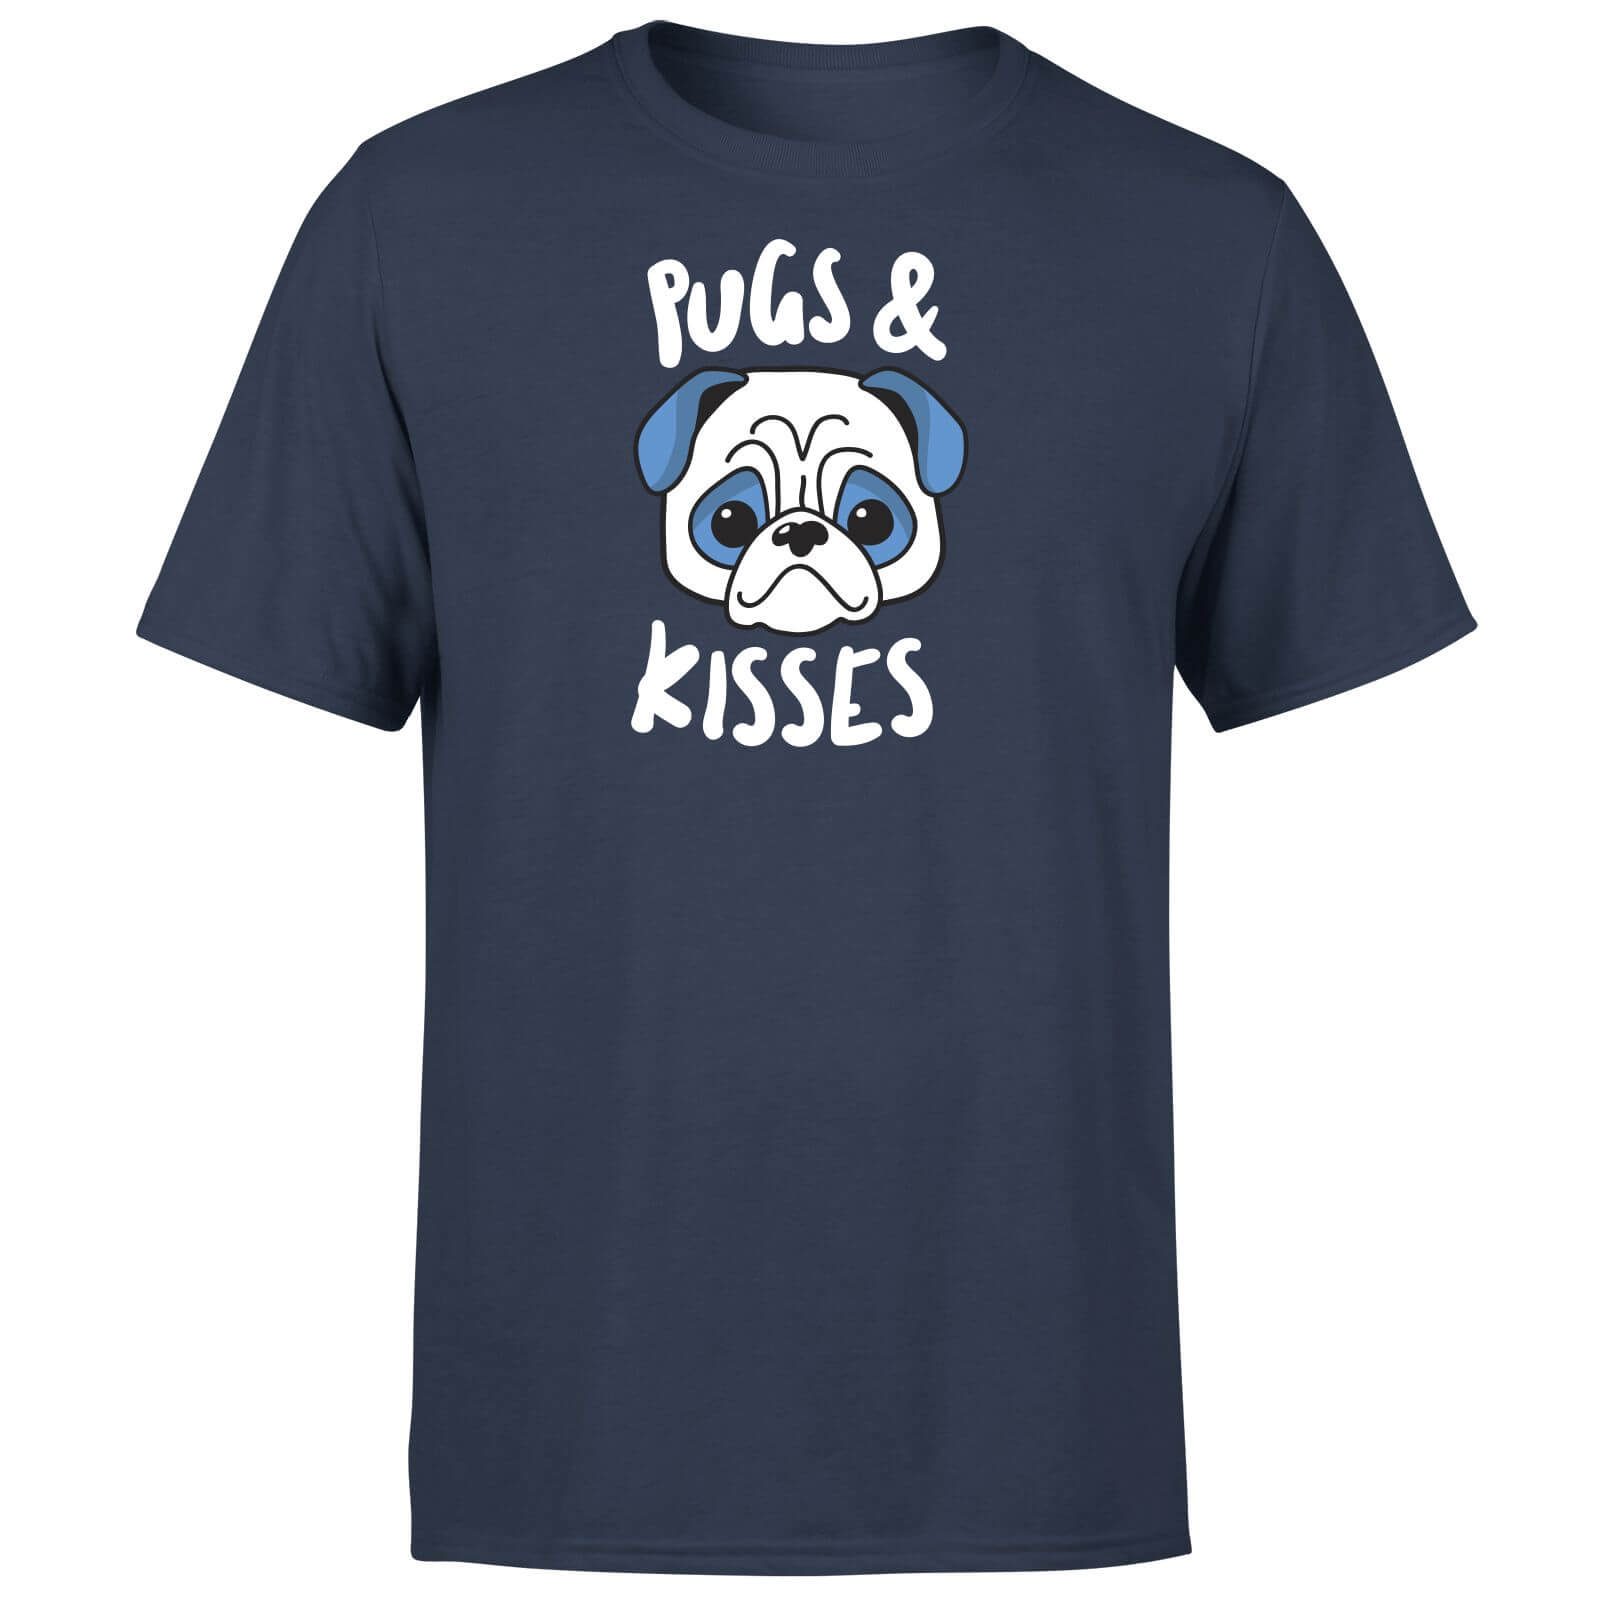 Pugs & Kisses T-Shirt - Navy - S - Navy